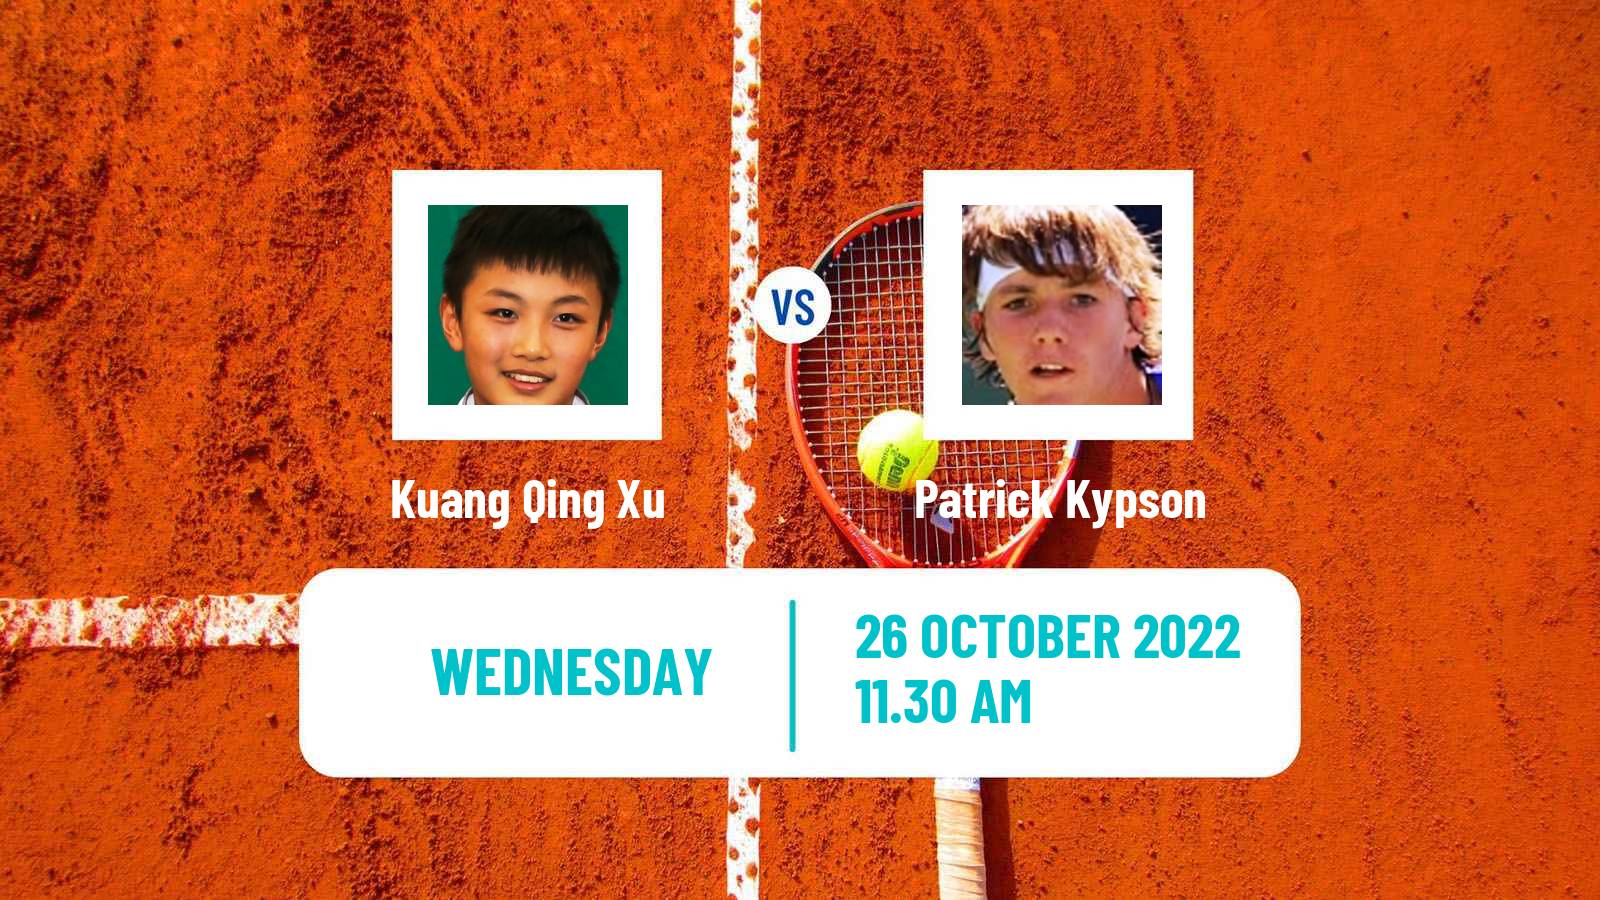 Tennis ITF Tournaments Kuang Qing Xu - Patrick Kypson